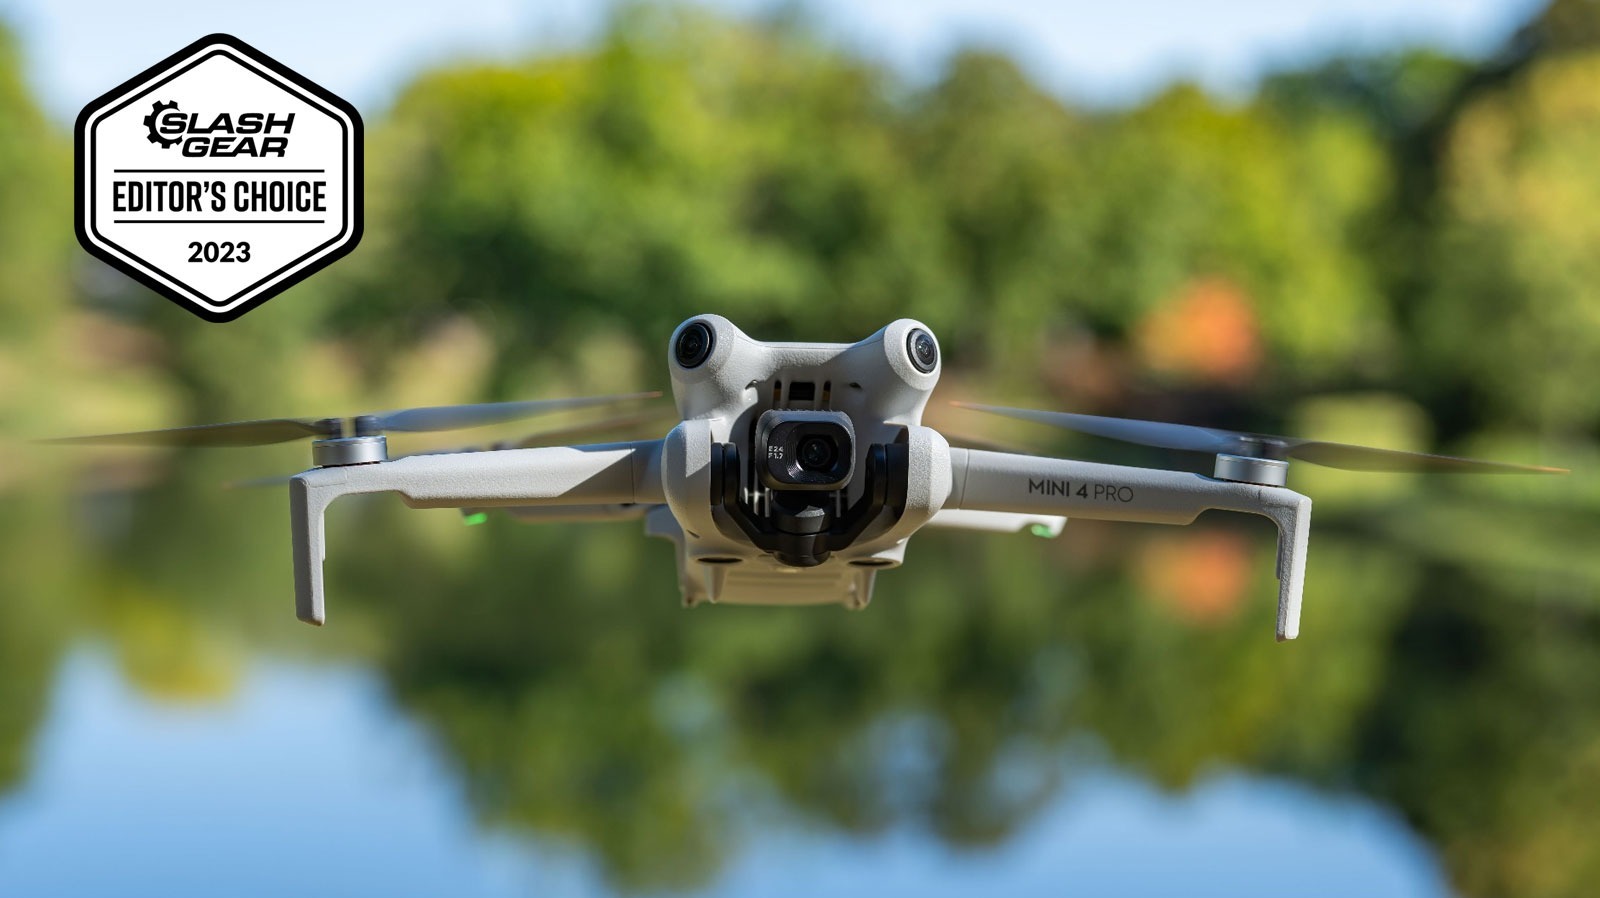 DJI Mini 4 Pro - Lightweight Portable Drone